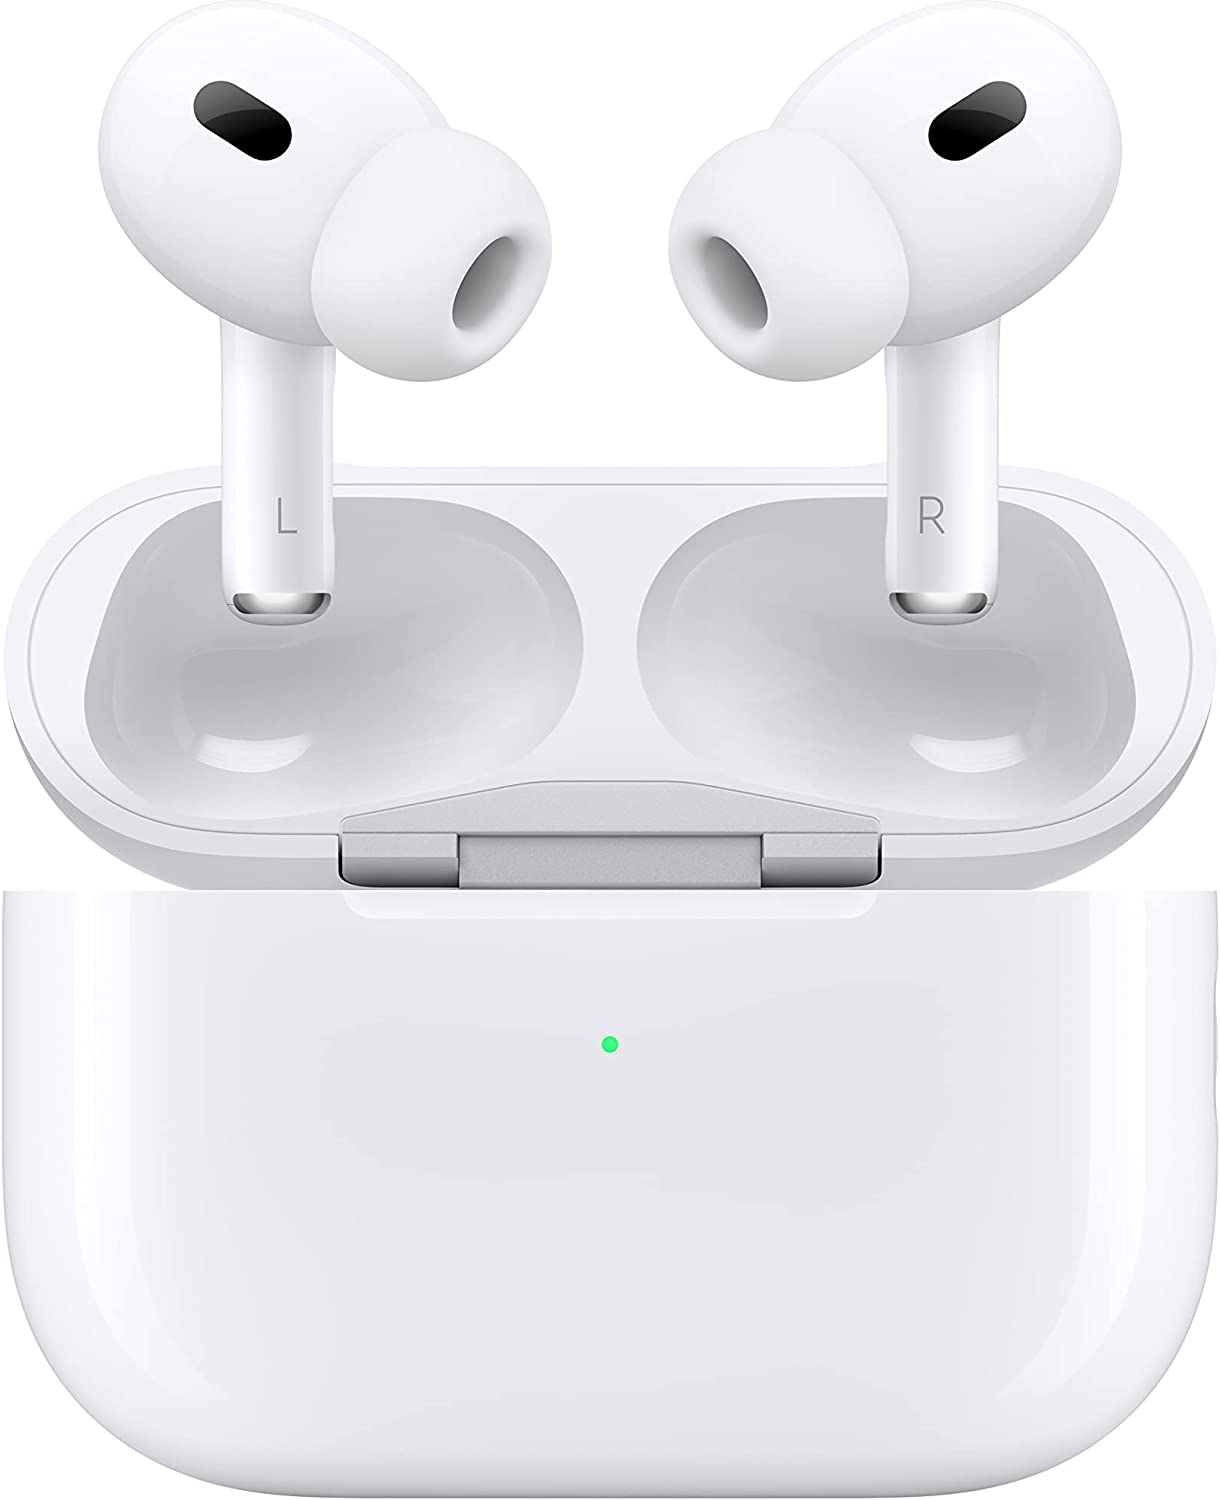 Save 20% on Apple's 2nd Gen Pro wireless earbuds - NotebookCheck.net News